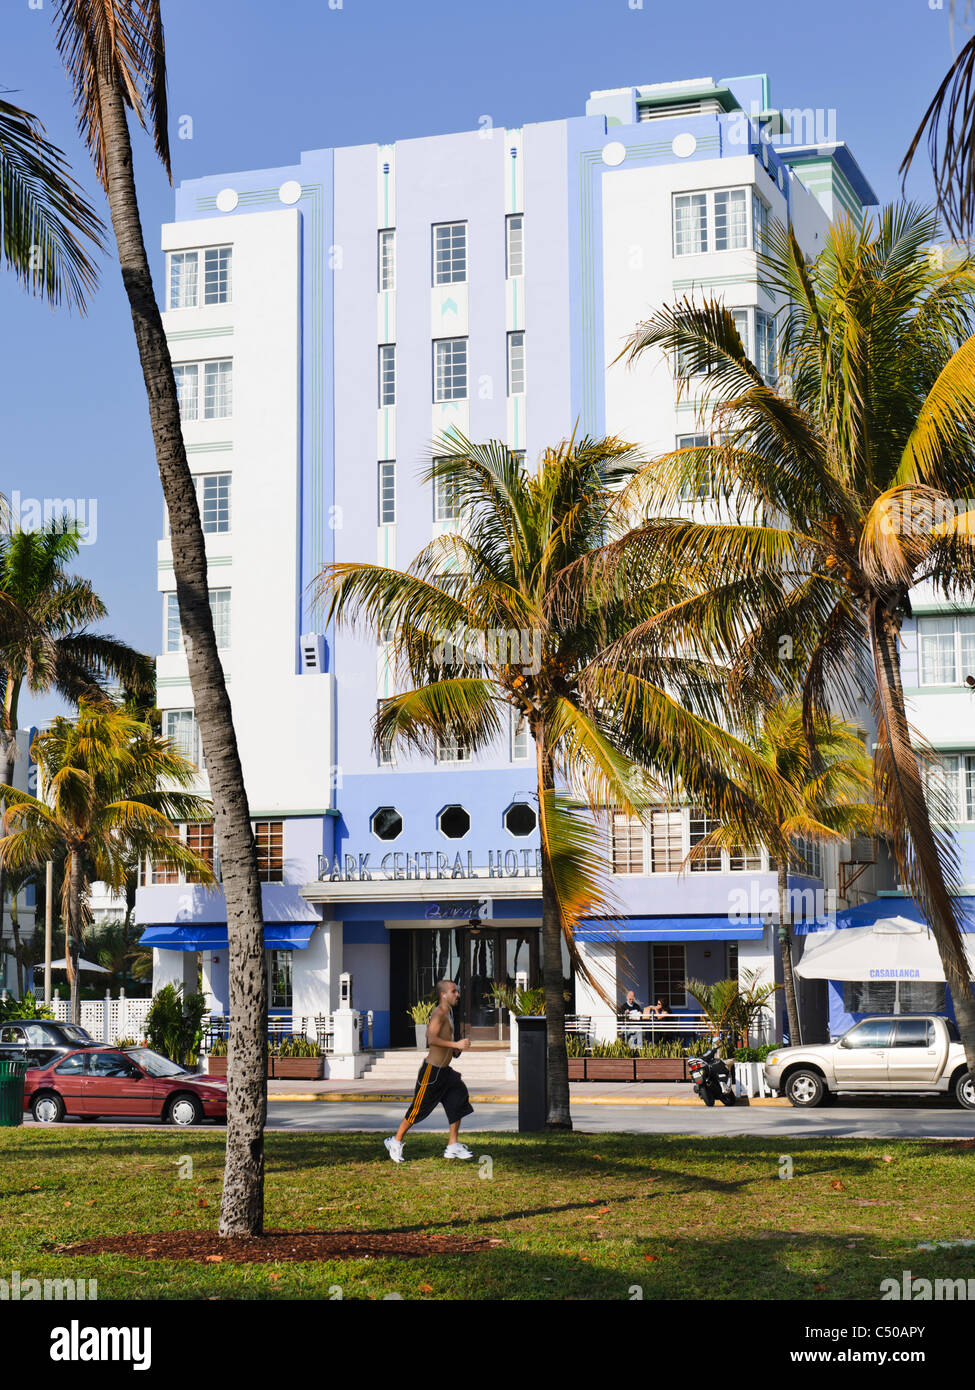 Mann Joggen draußen Park Central Hotel, South Beach, Miami Stockfoto